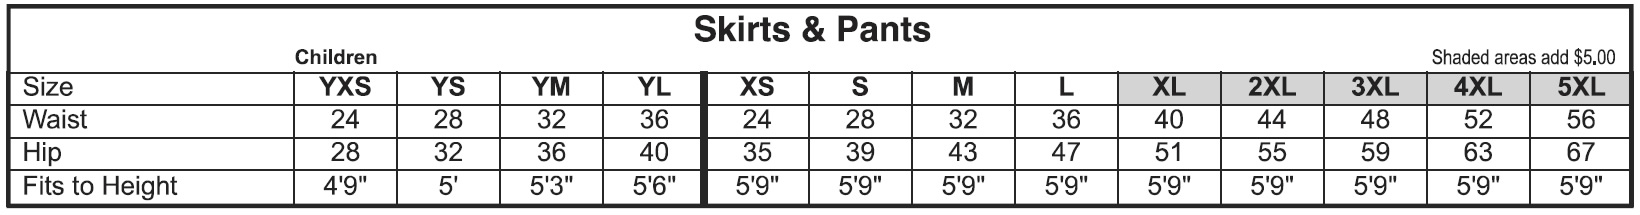 Skirts and Pants Size Chart